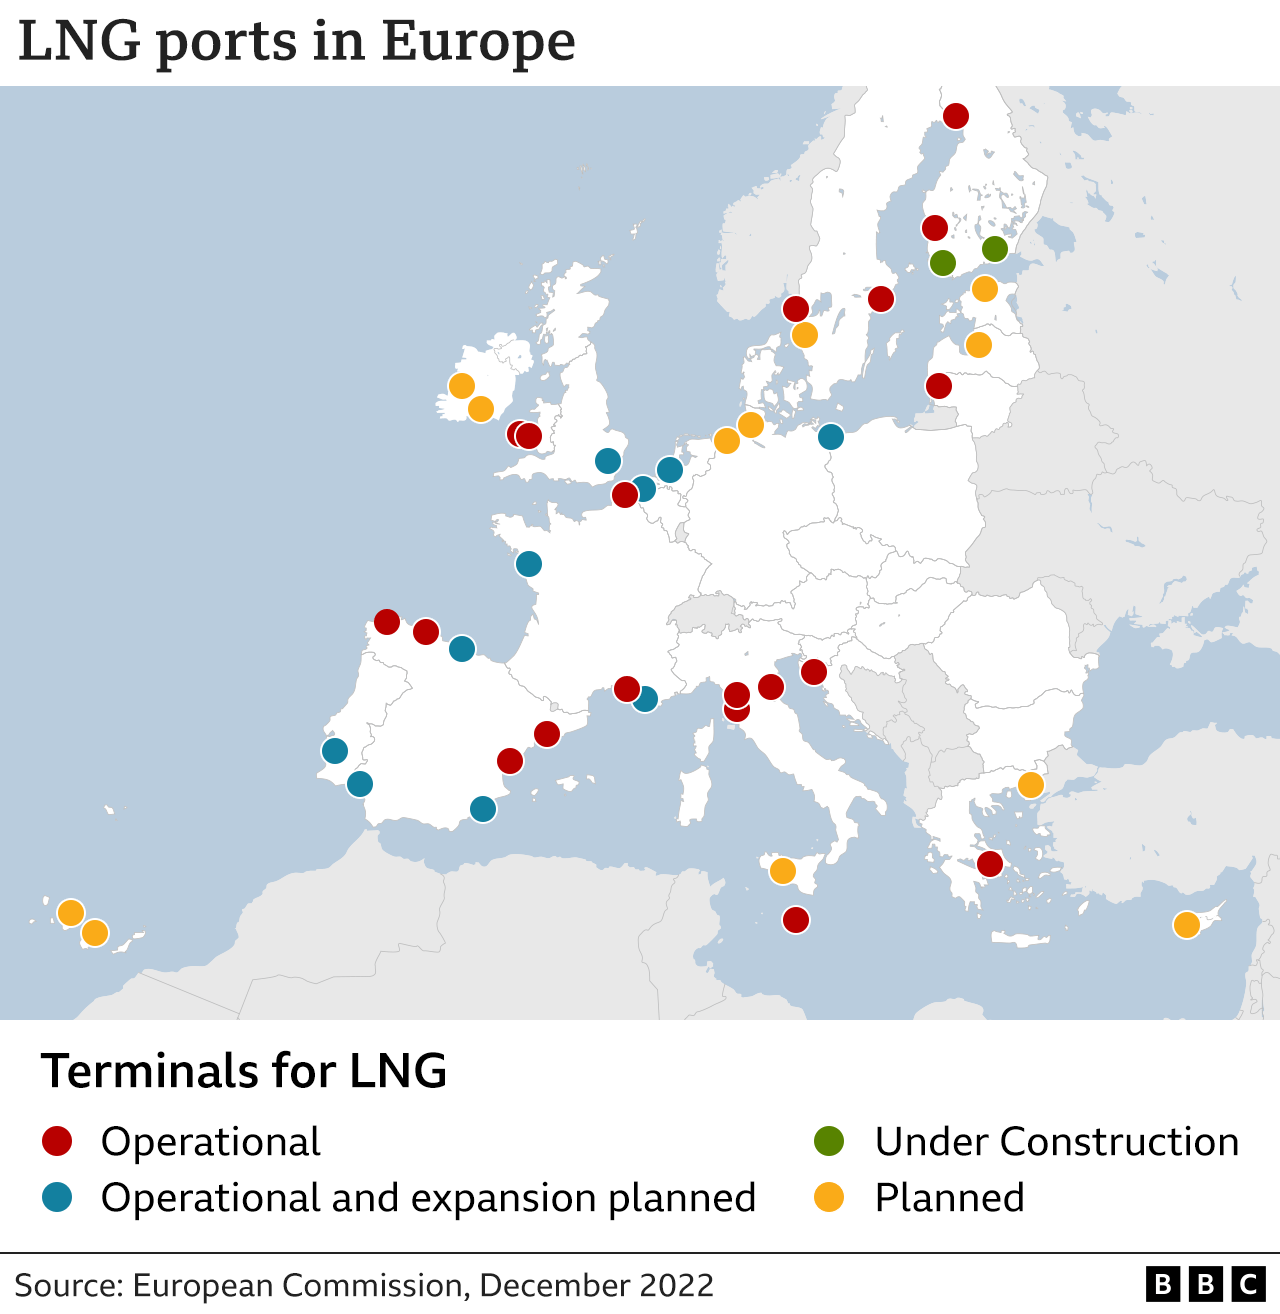 LNG terminal across Europe